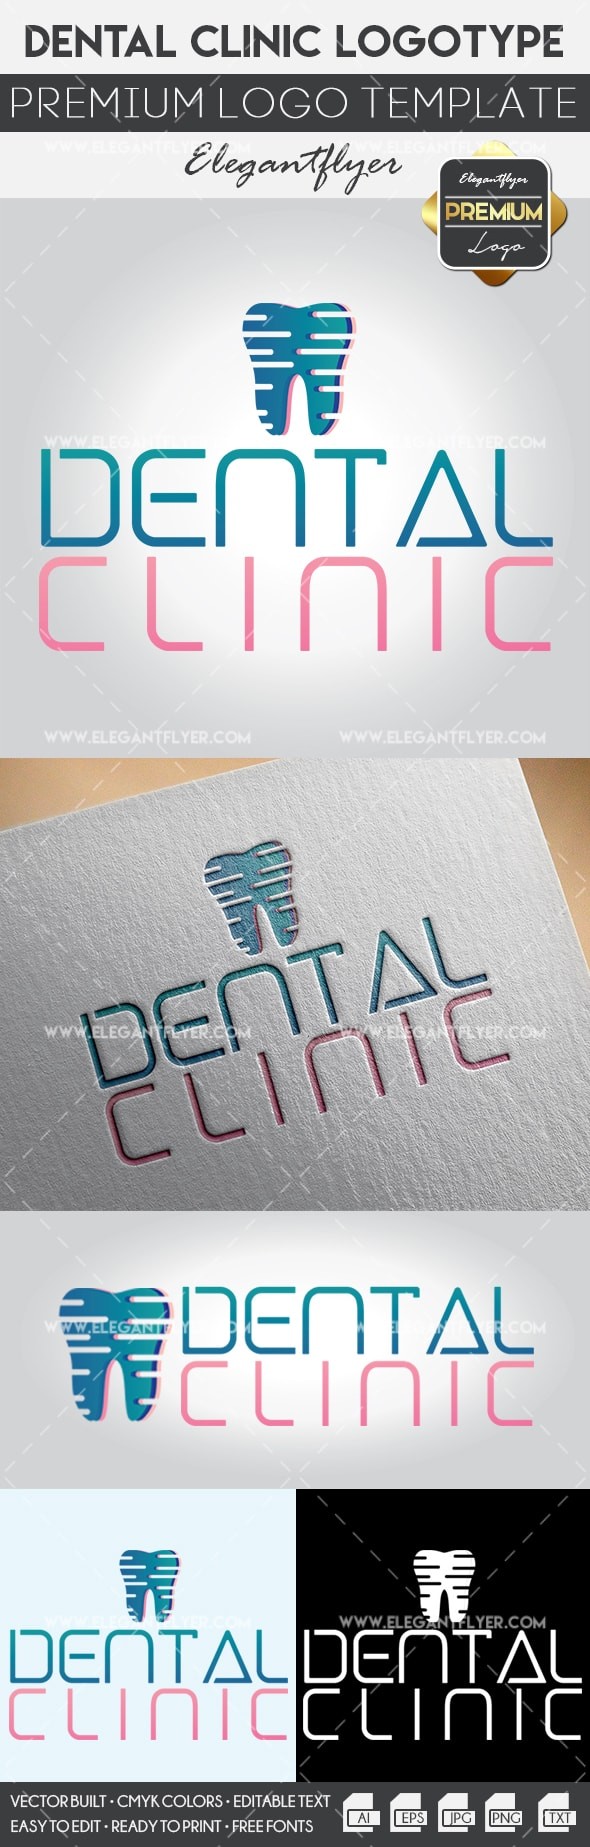 Clínica dental by ElegantFlyer